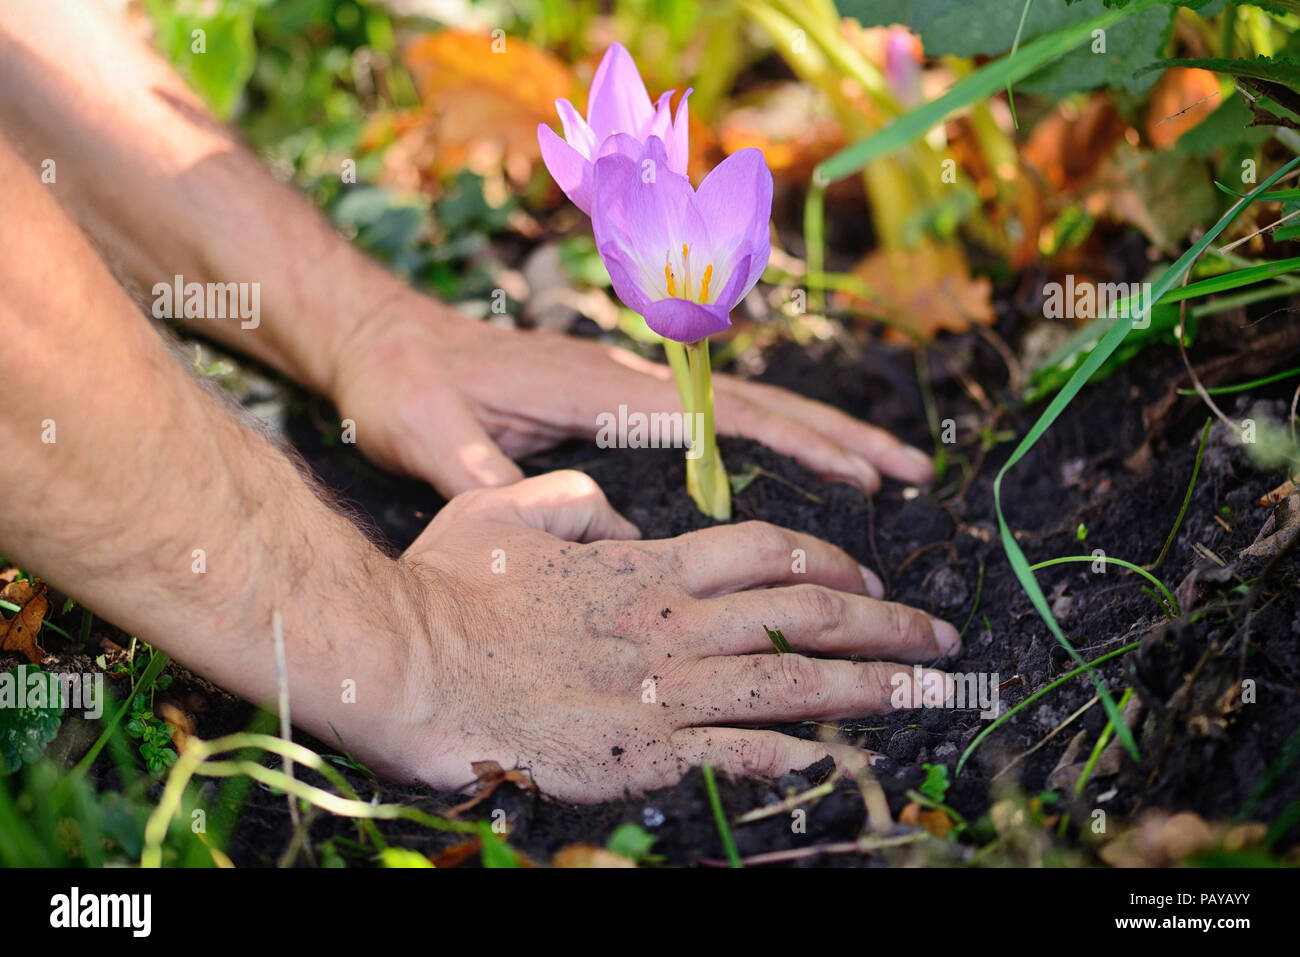 Gardeners hands planting flowers (Colchicum autumnale) in a garden Stock Photo